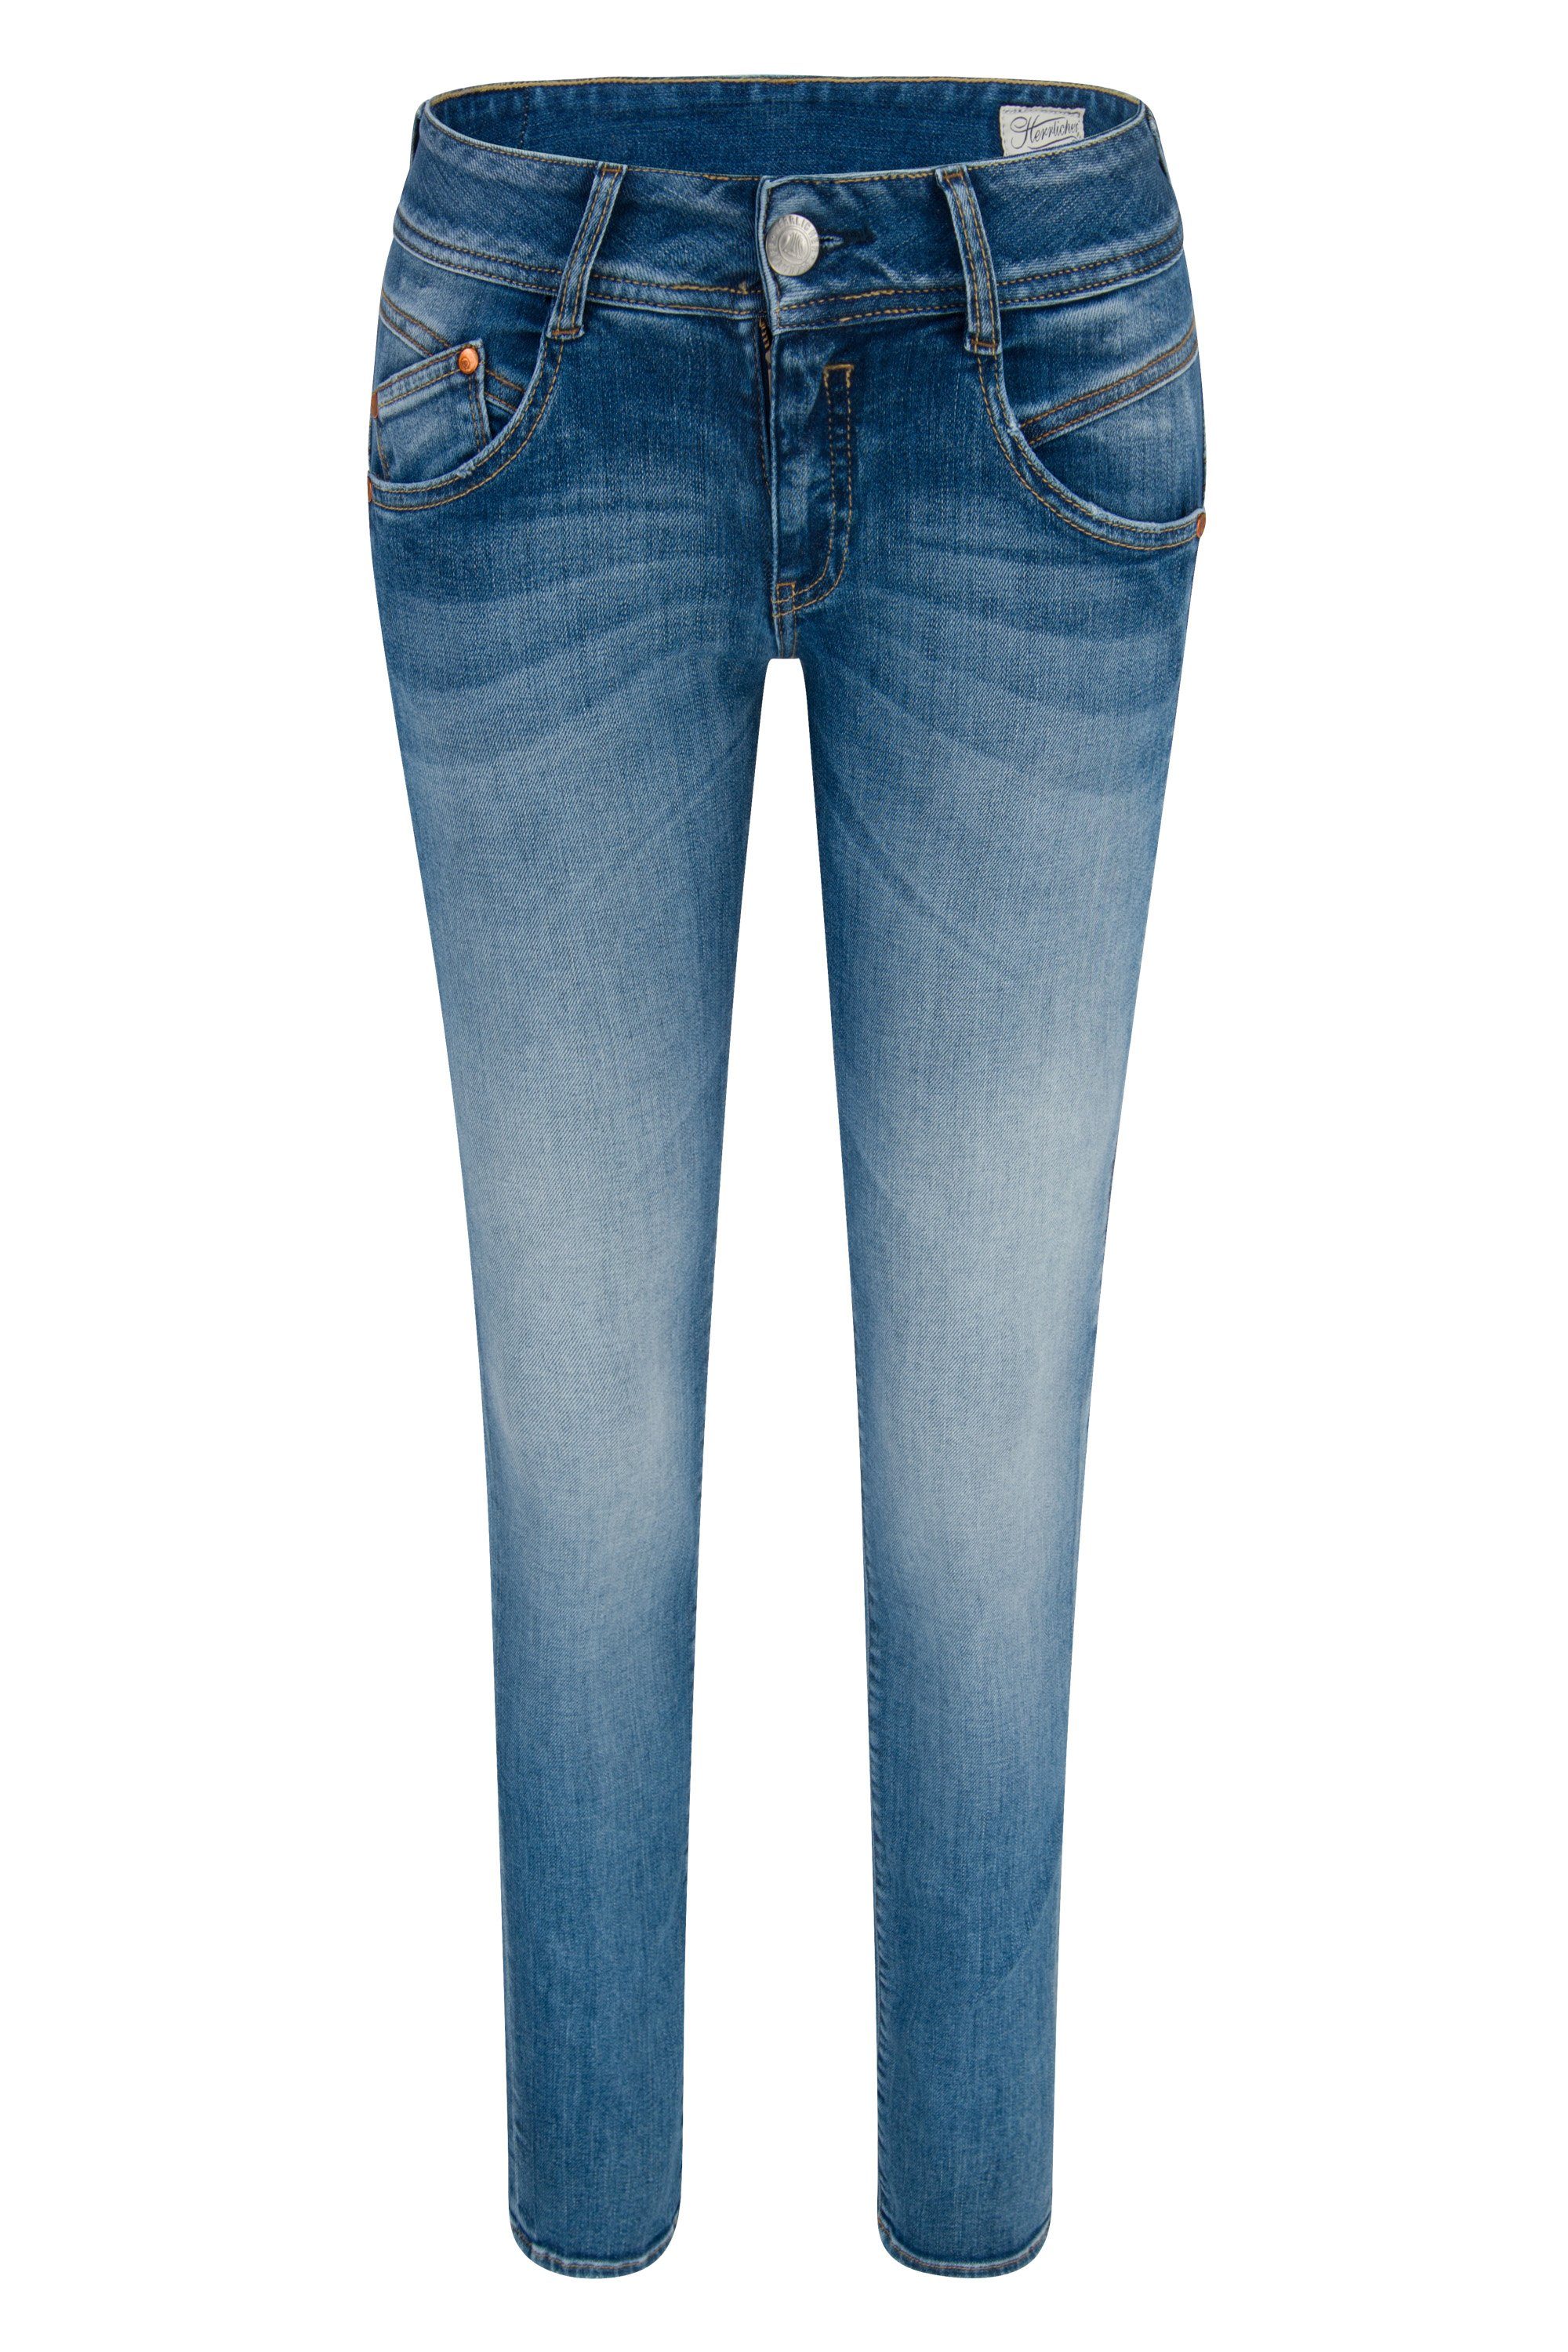 Organic Denim Slim Herrlicher Stretch-Jeans 5606-OD100-666 HERRLICHER GILA faded blue